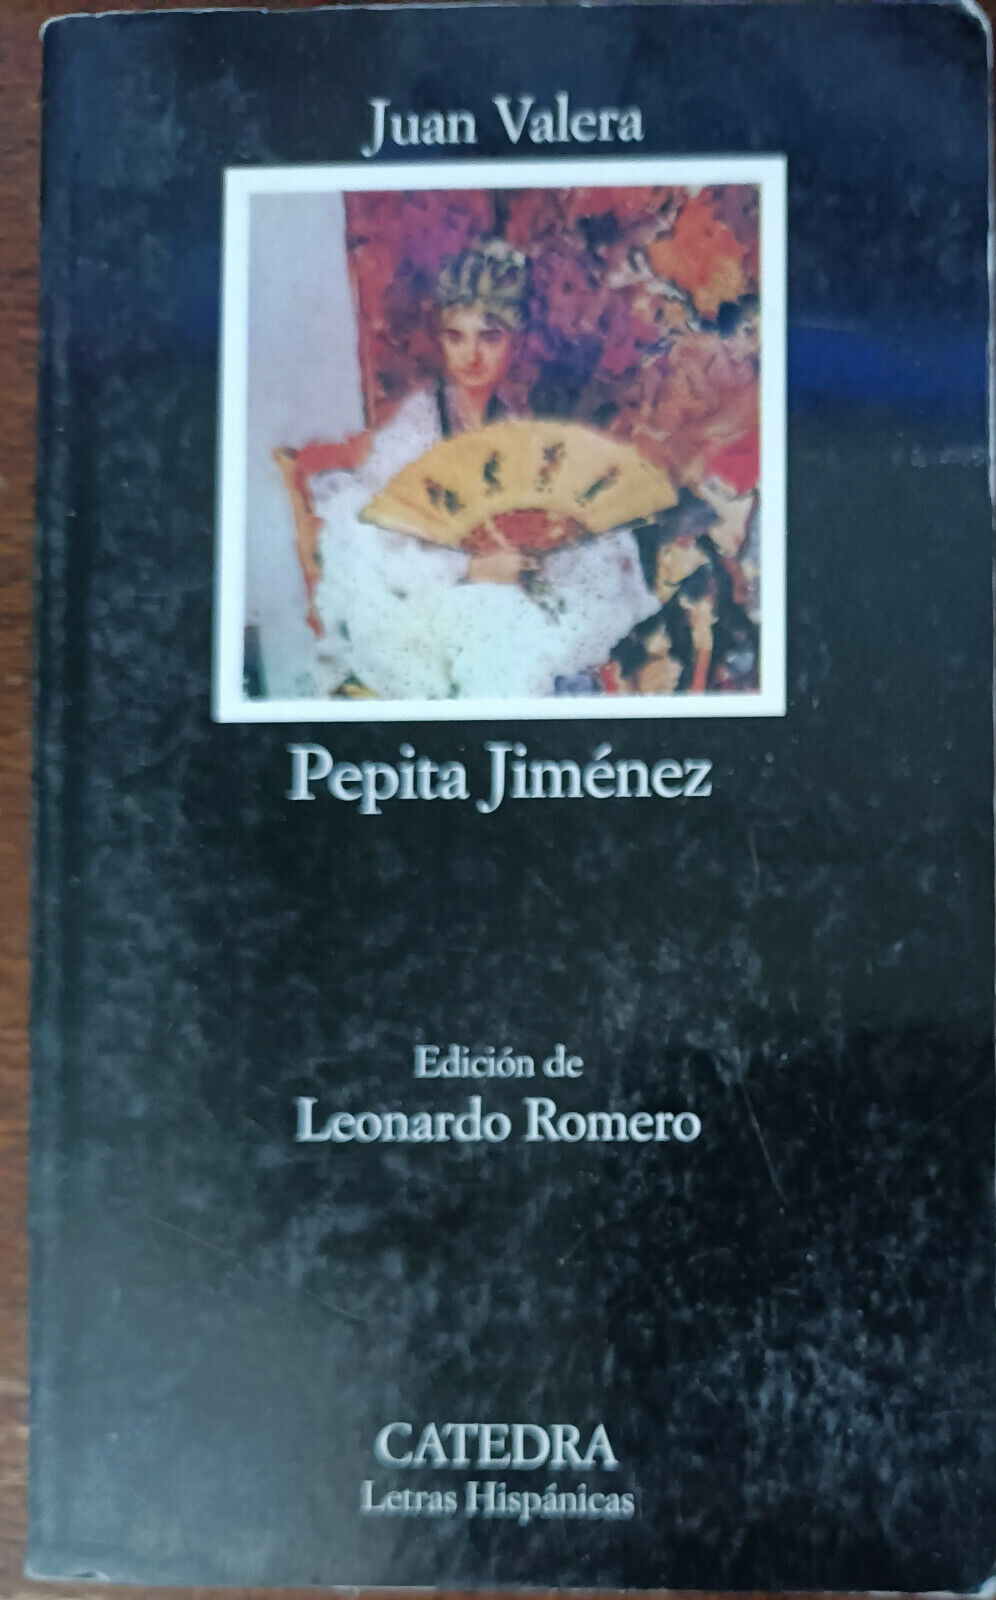 Pepita Jim?nez - Juan Valera - Catedra, 1989 - A